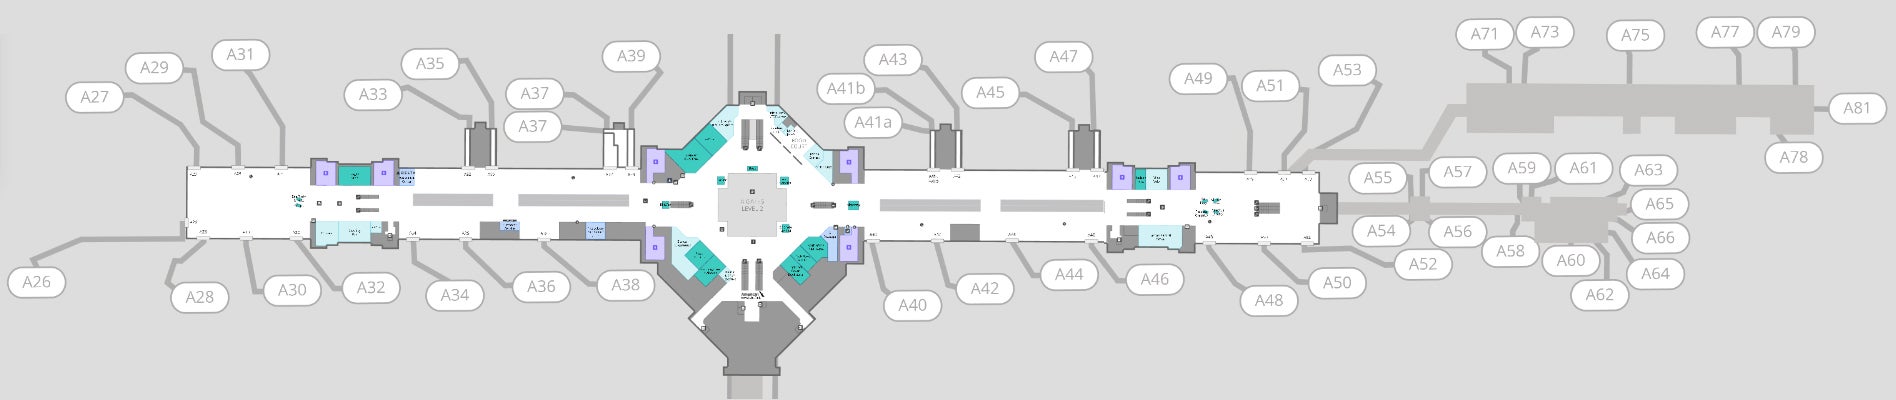 Denver International Airport Den Ultimate Terminal Guide 2020